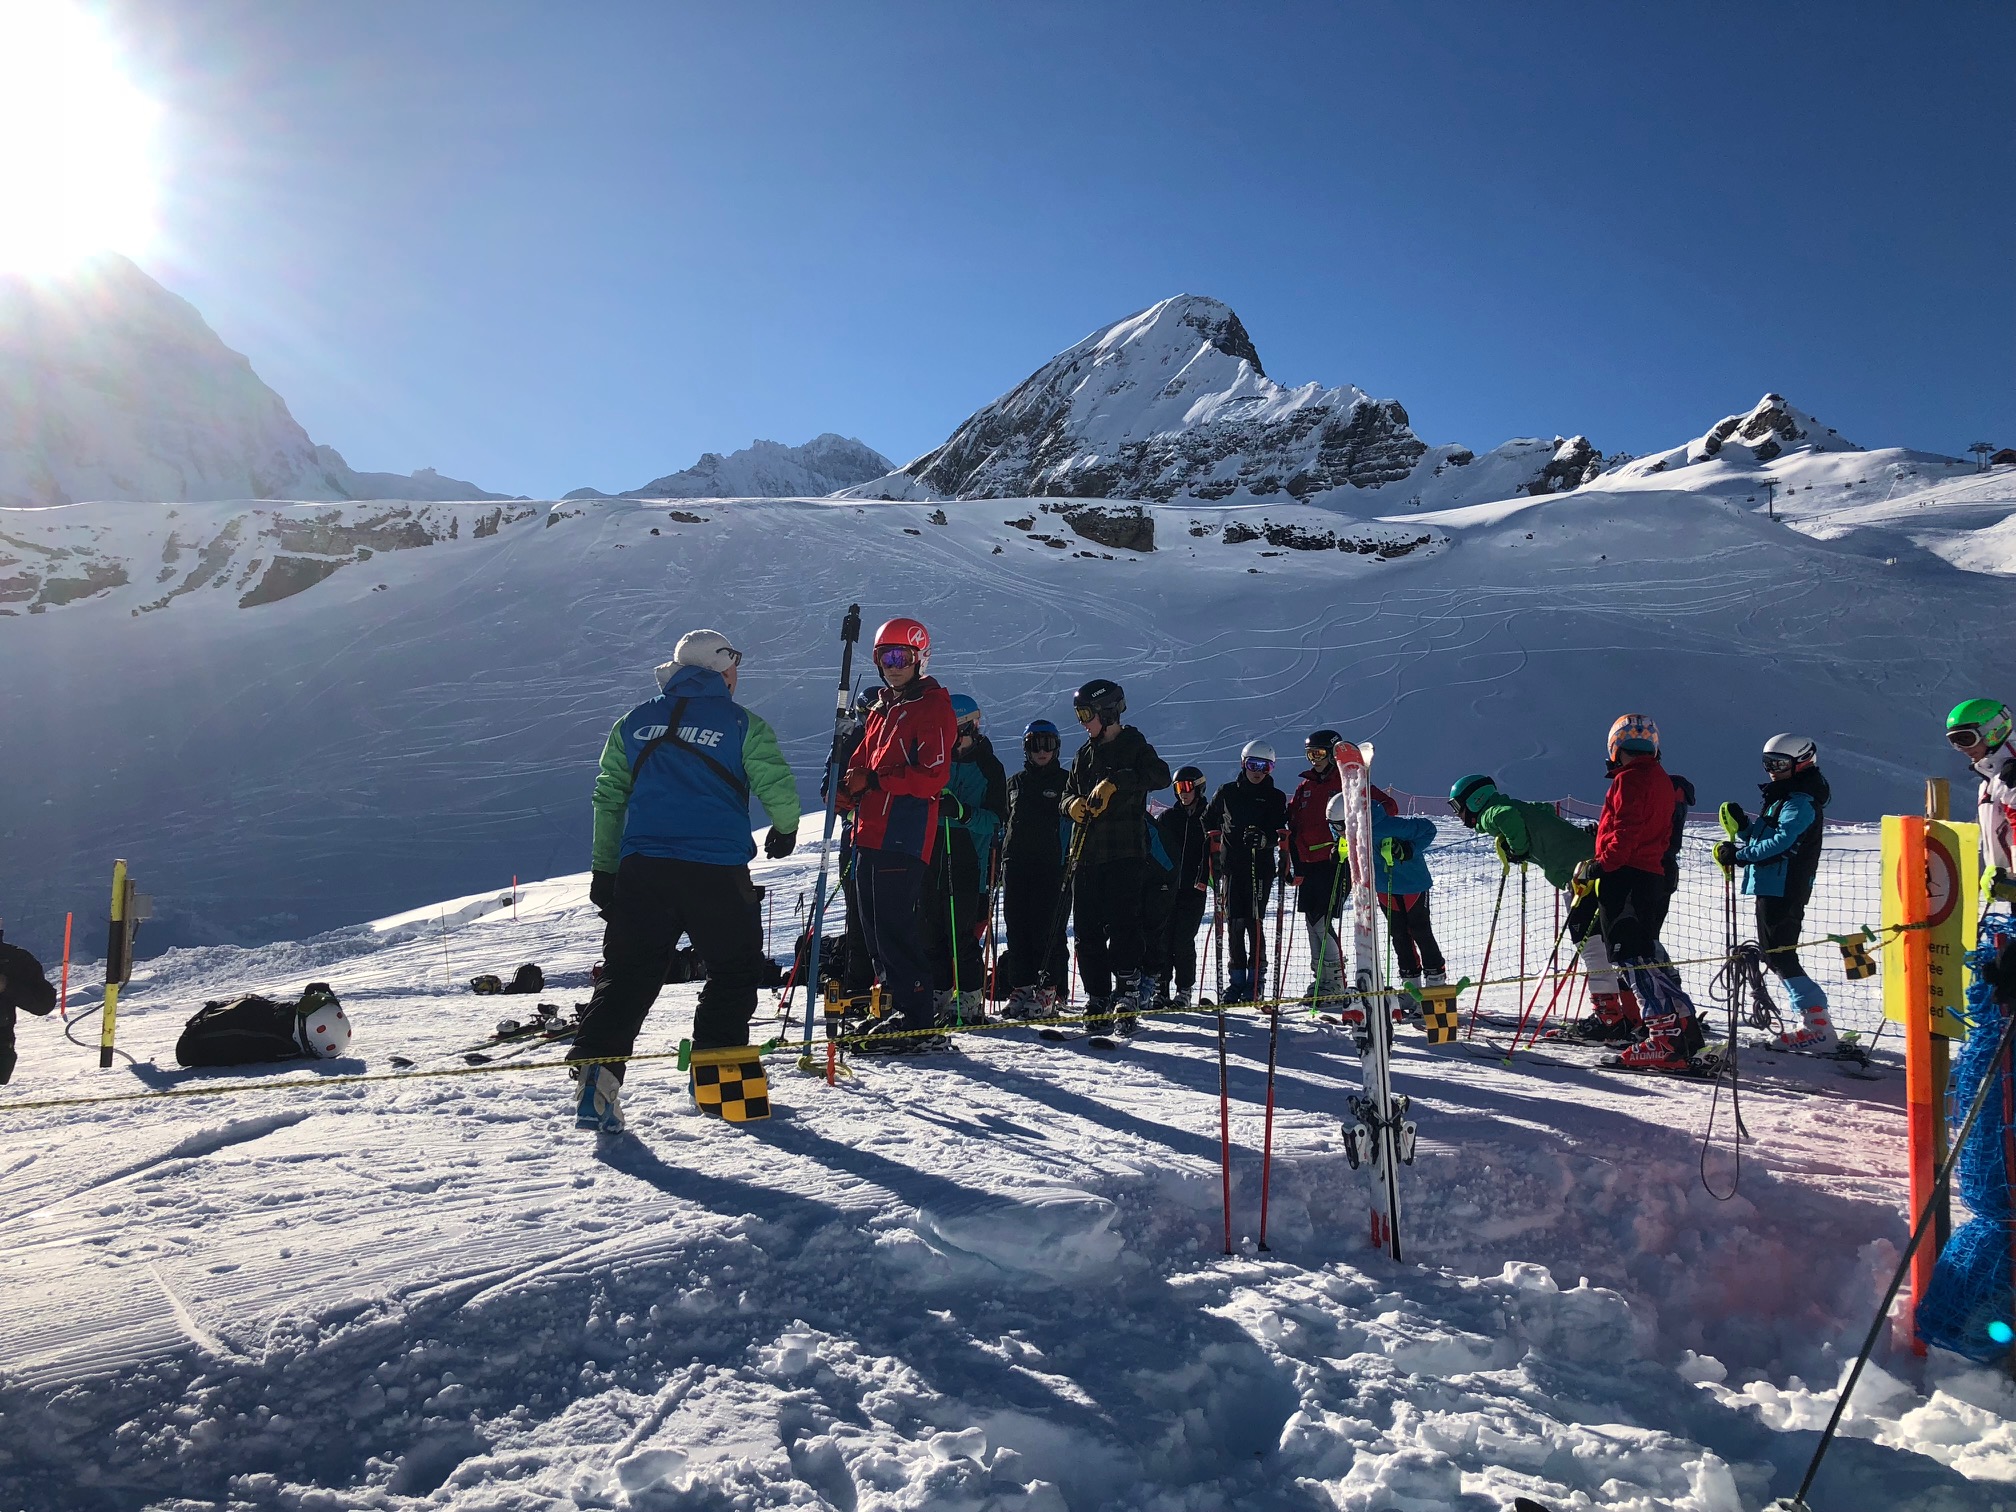 group travel ski